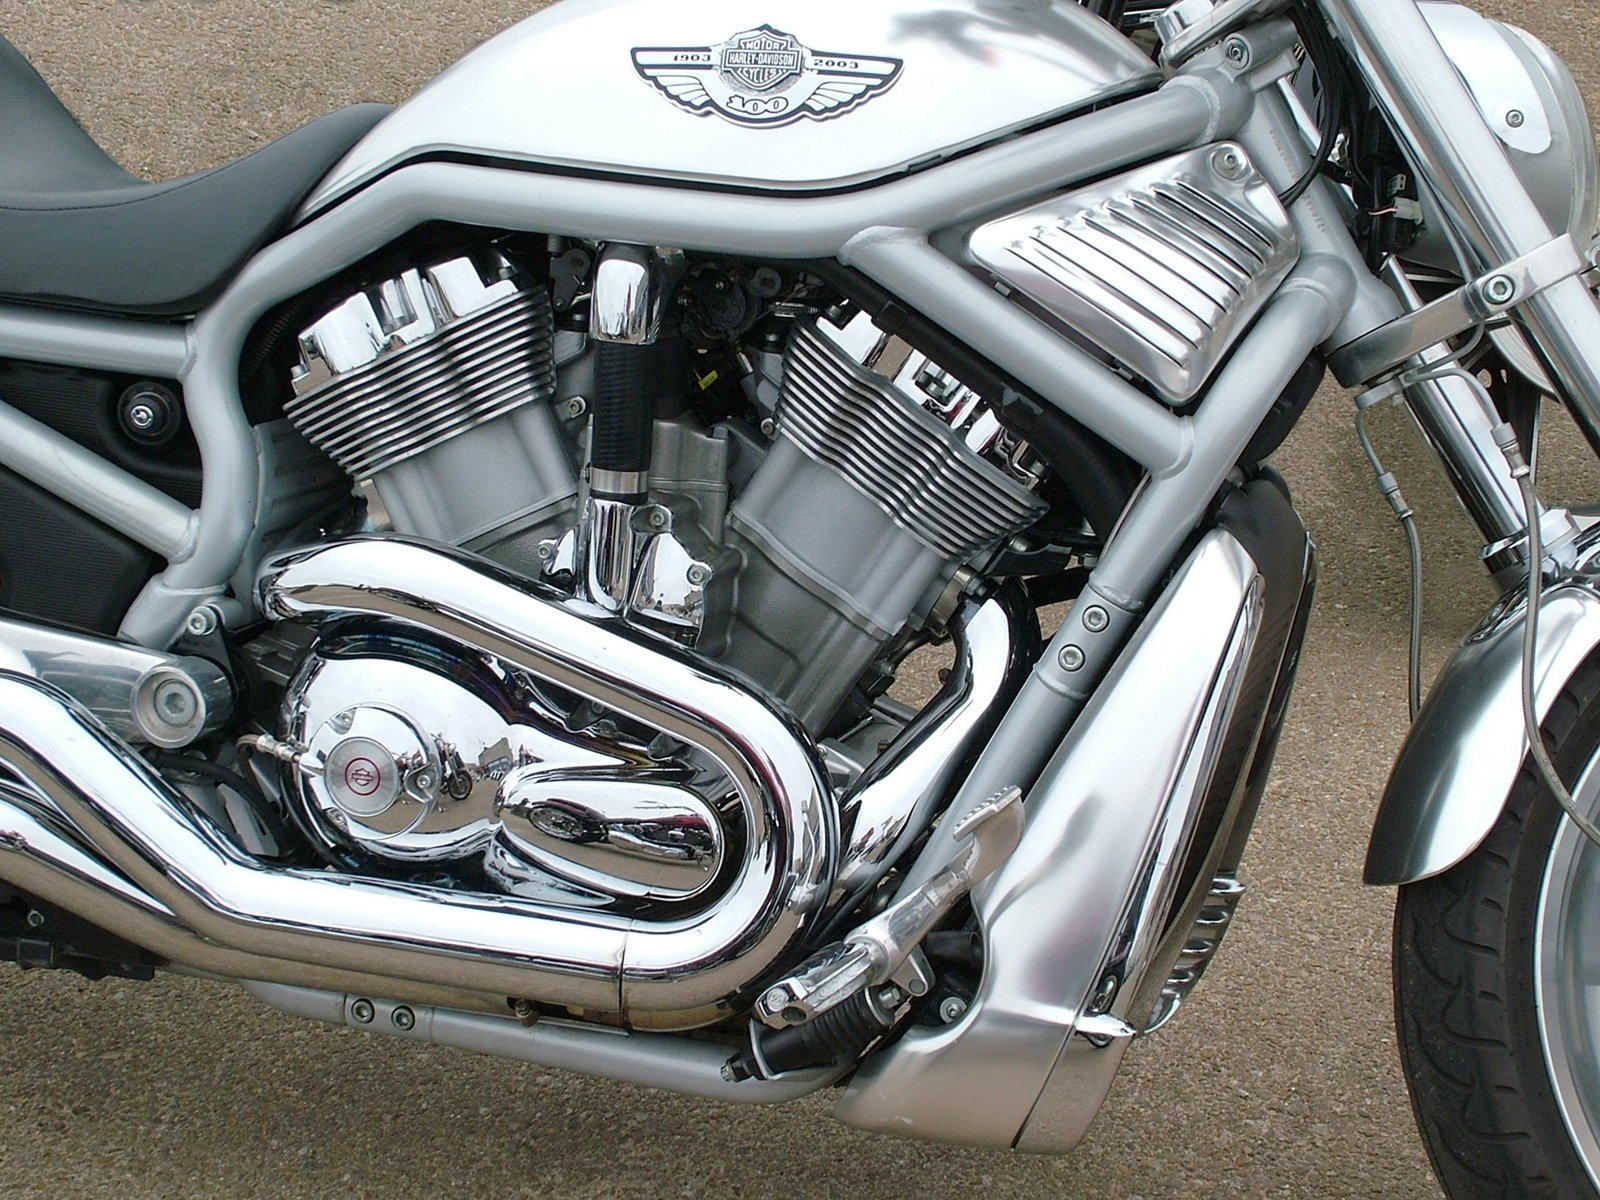 Harley Davidson Powered by Mike Peak